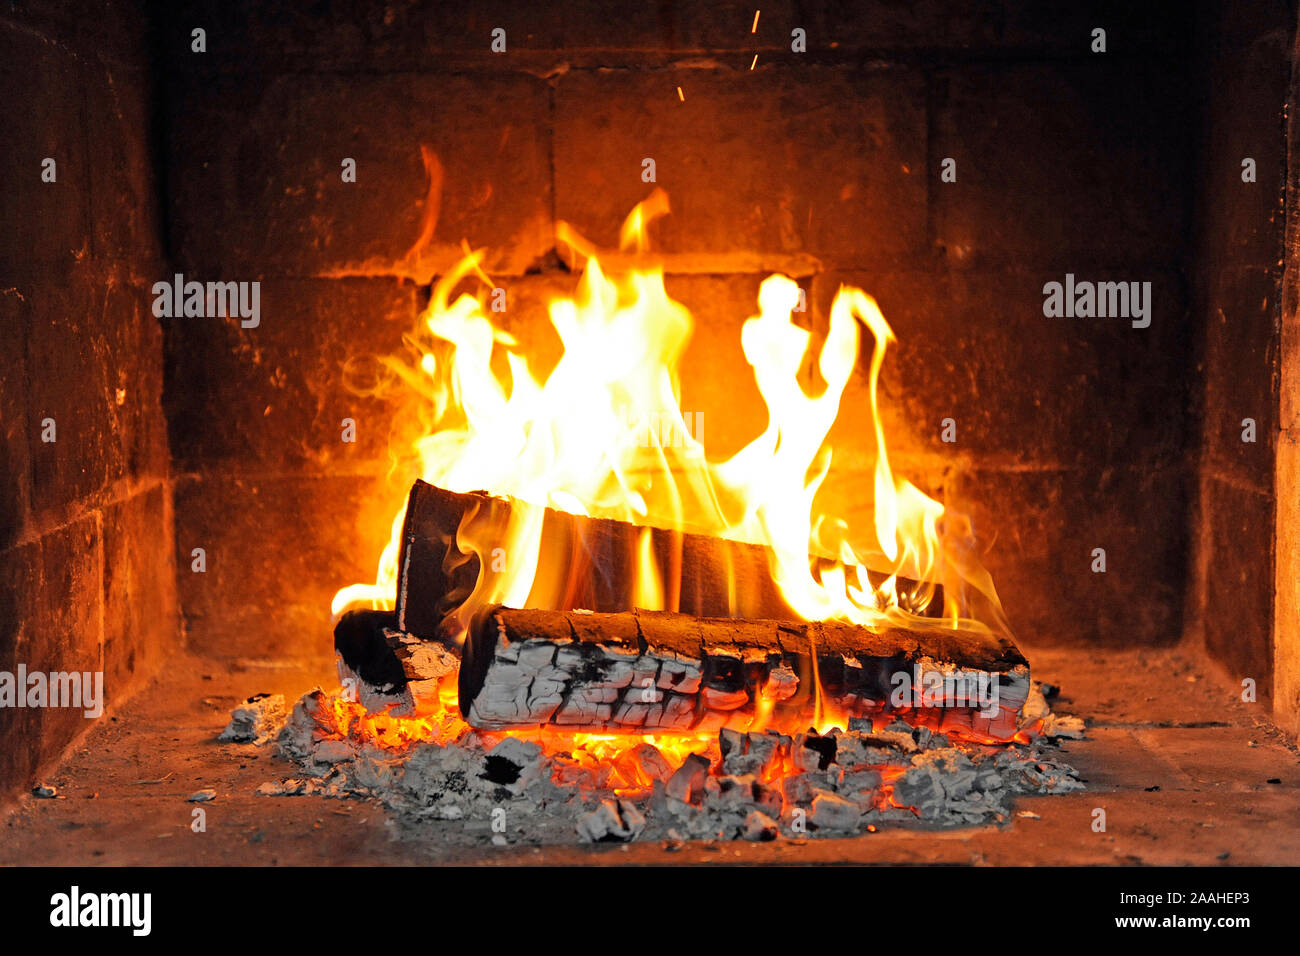 Holzfeuer einem offenen Kamin Banque D'Images